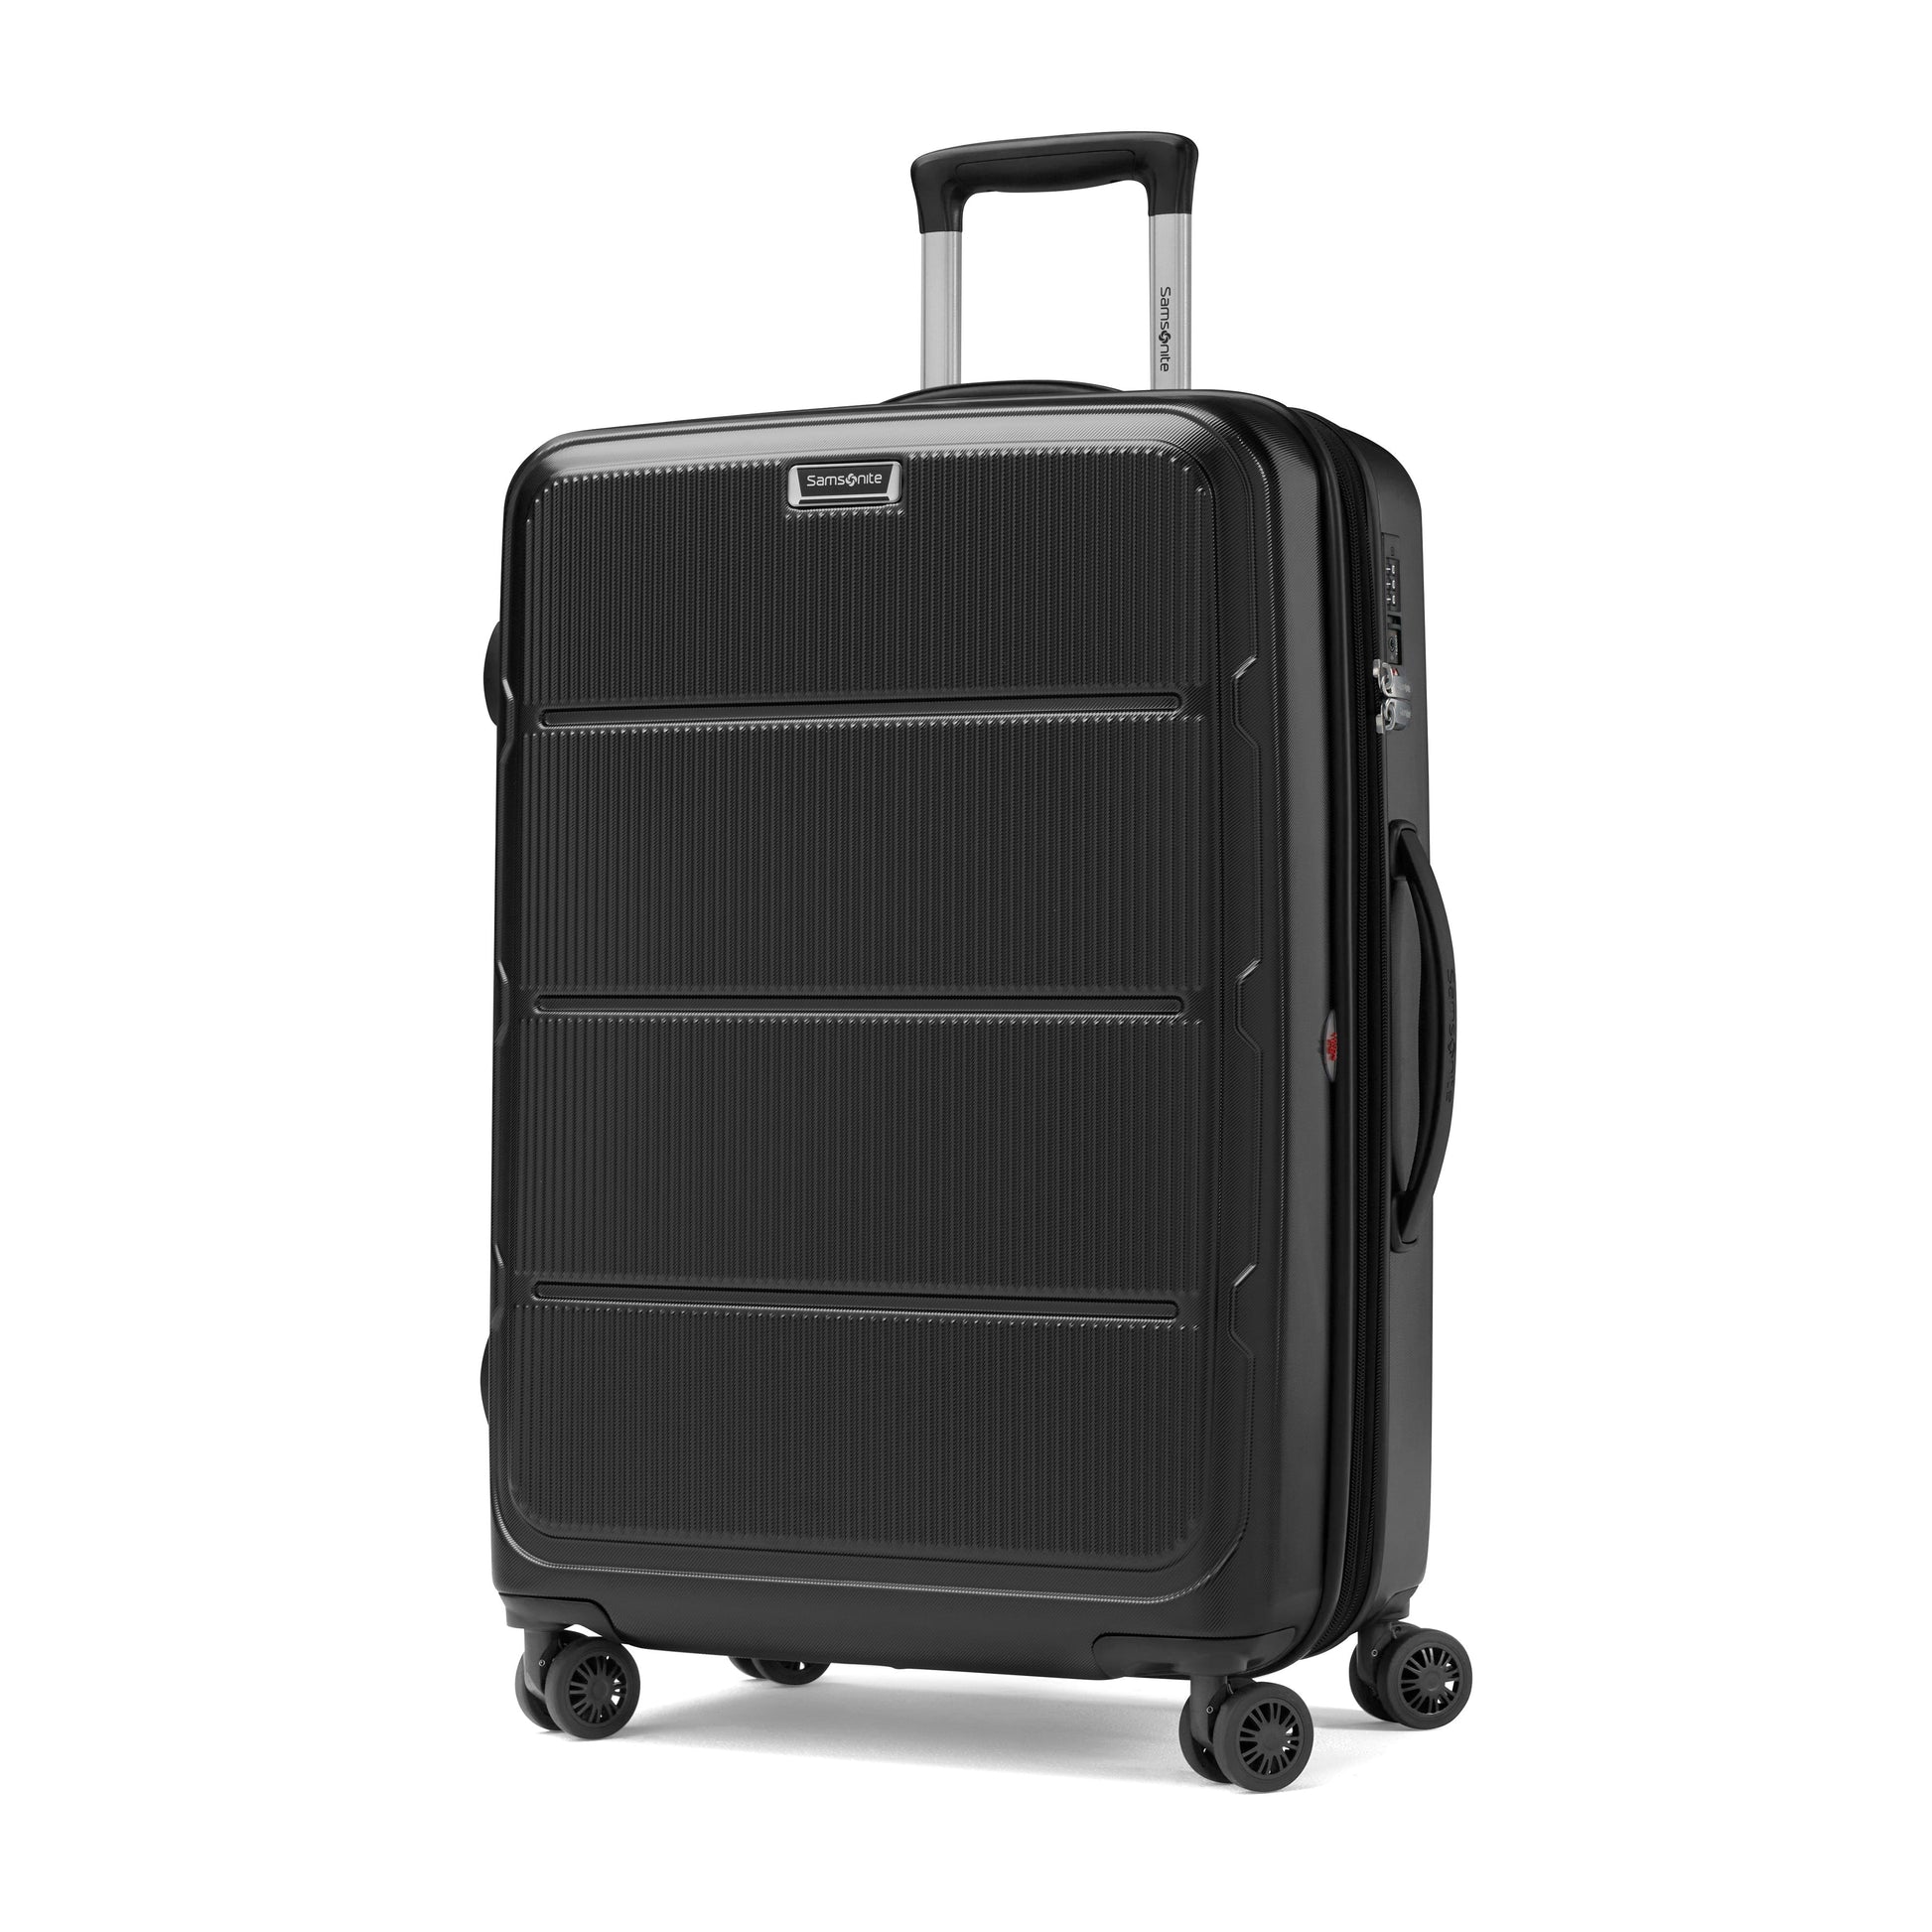 Samsonite Streamlite Pro 3-Piece Nested Spinner Luggage Set